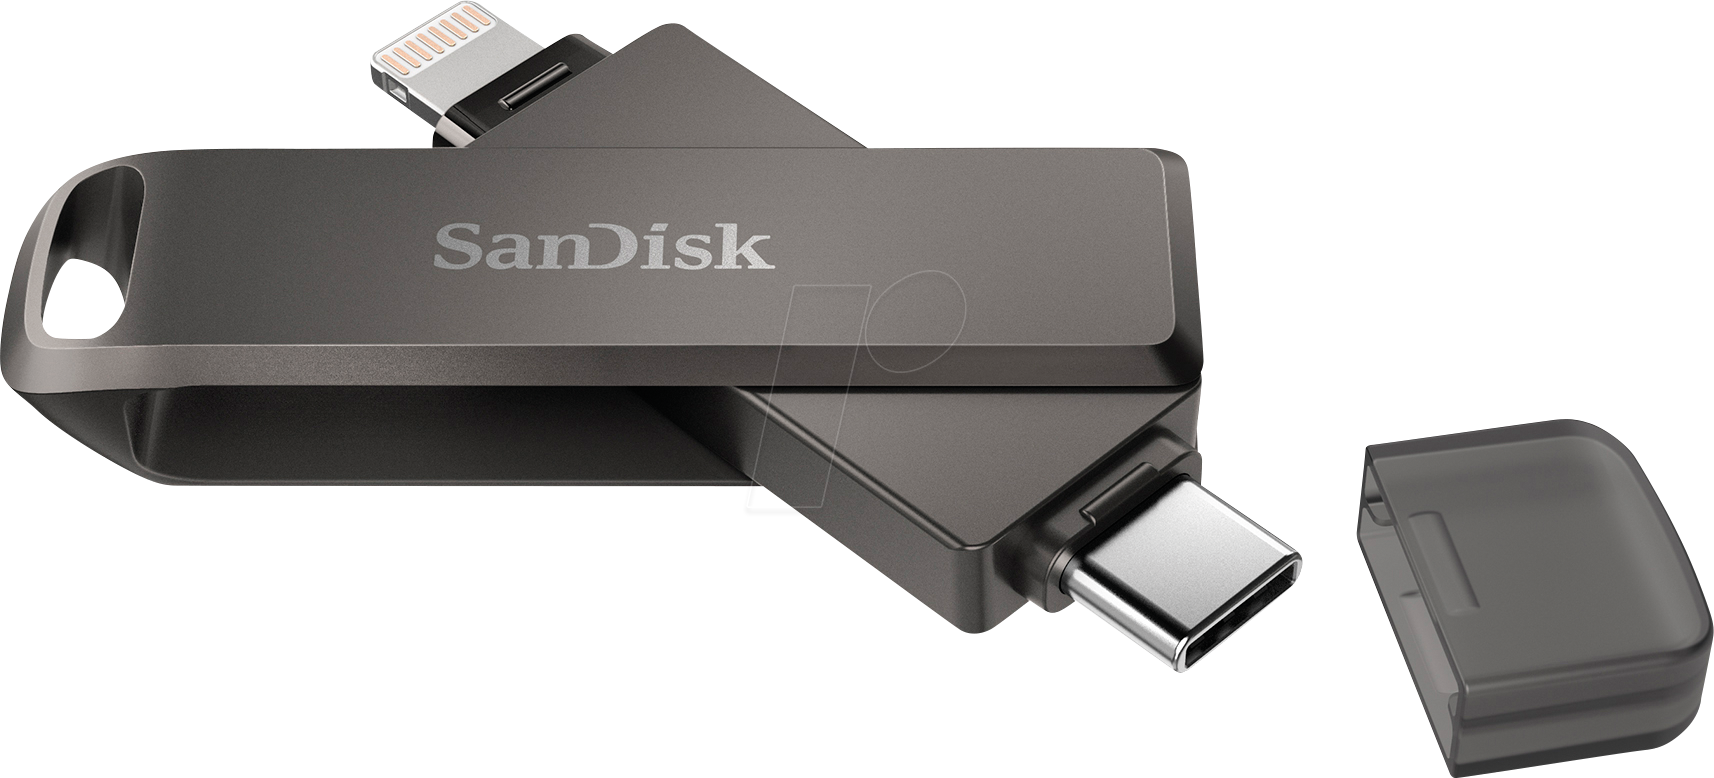 Tutor direkte Forurenet SDIX70N064GGN6NN: USB stick, USB 3.0, 64 GB, iXpand Luxe, Lightning, USB-C  at reichelt elektronik